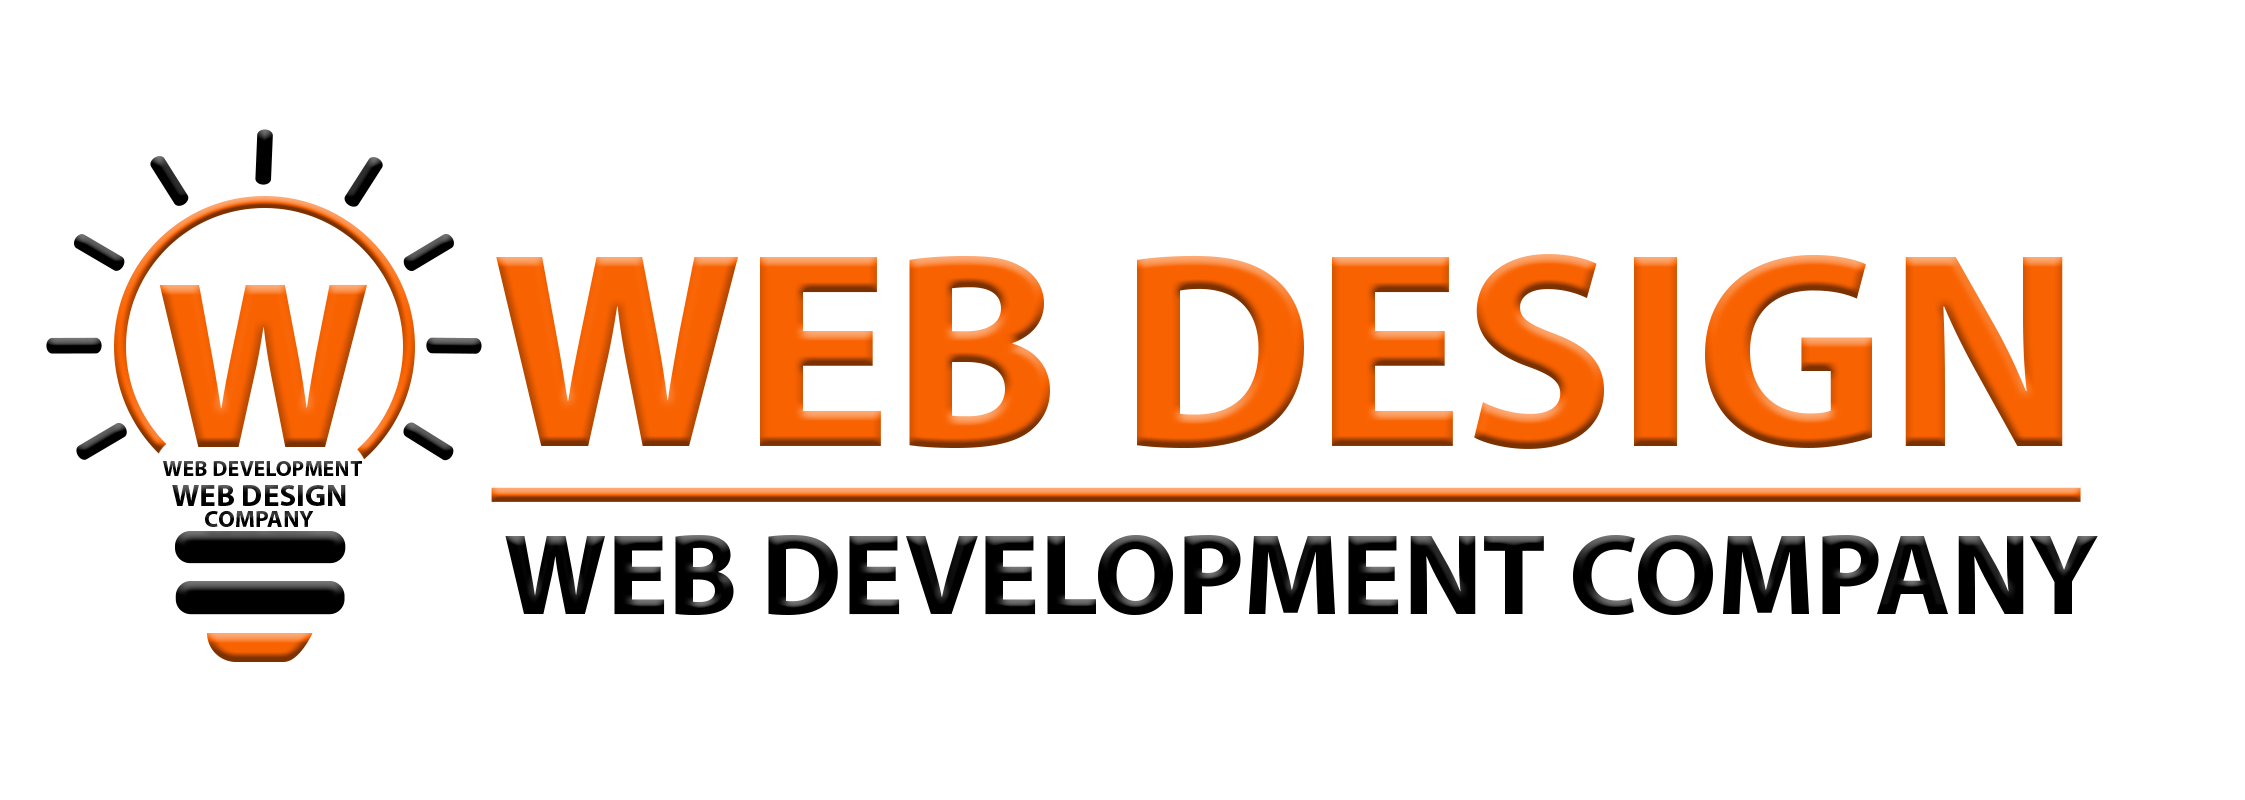 Chennai Web Design Company Best Web Design Company Chennai Tamilnadu 16968527755